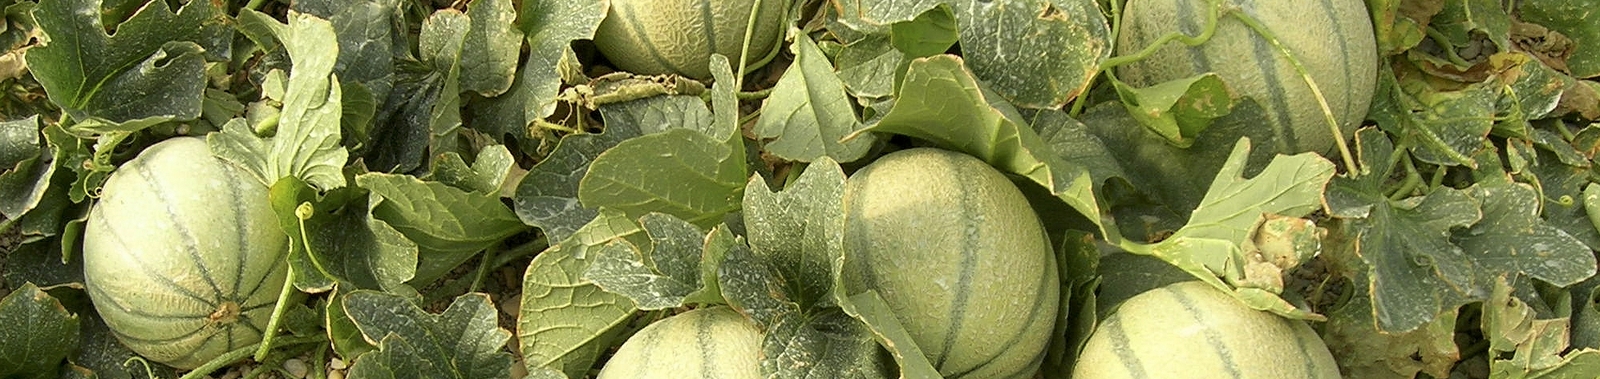 Influencing Melon Quality